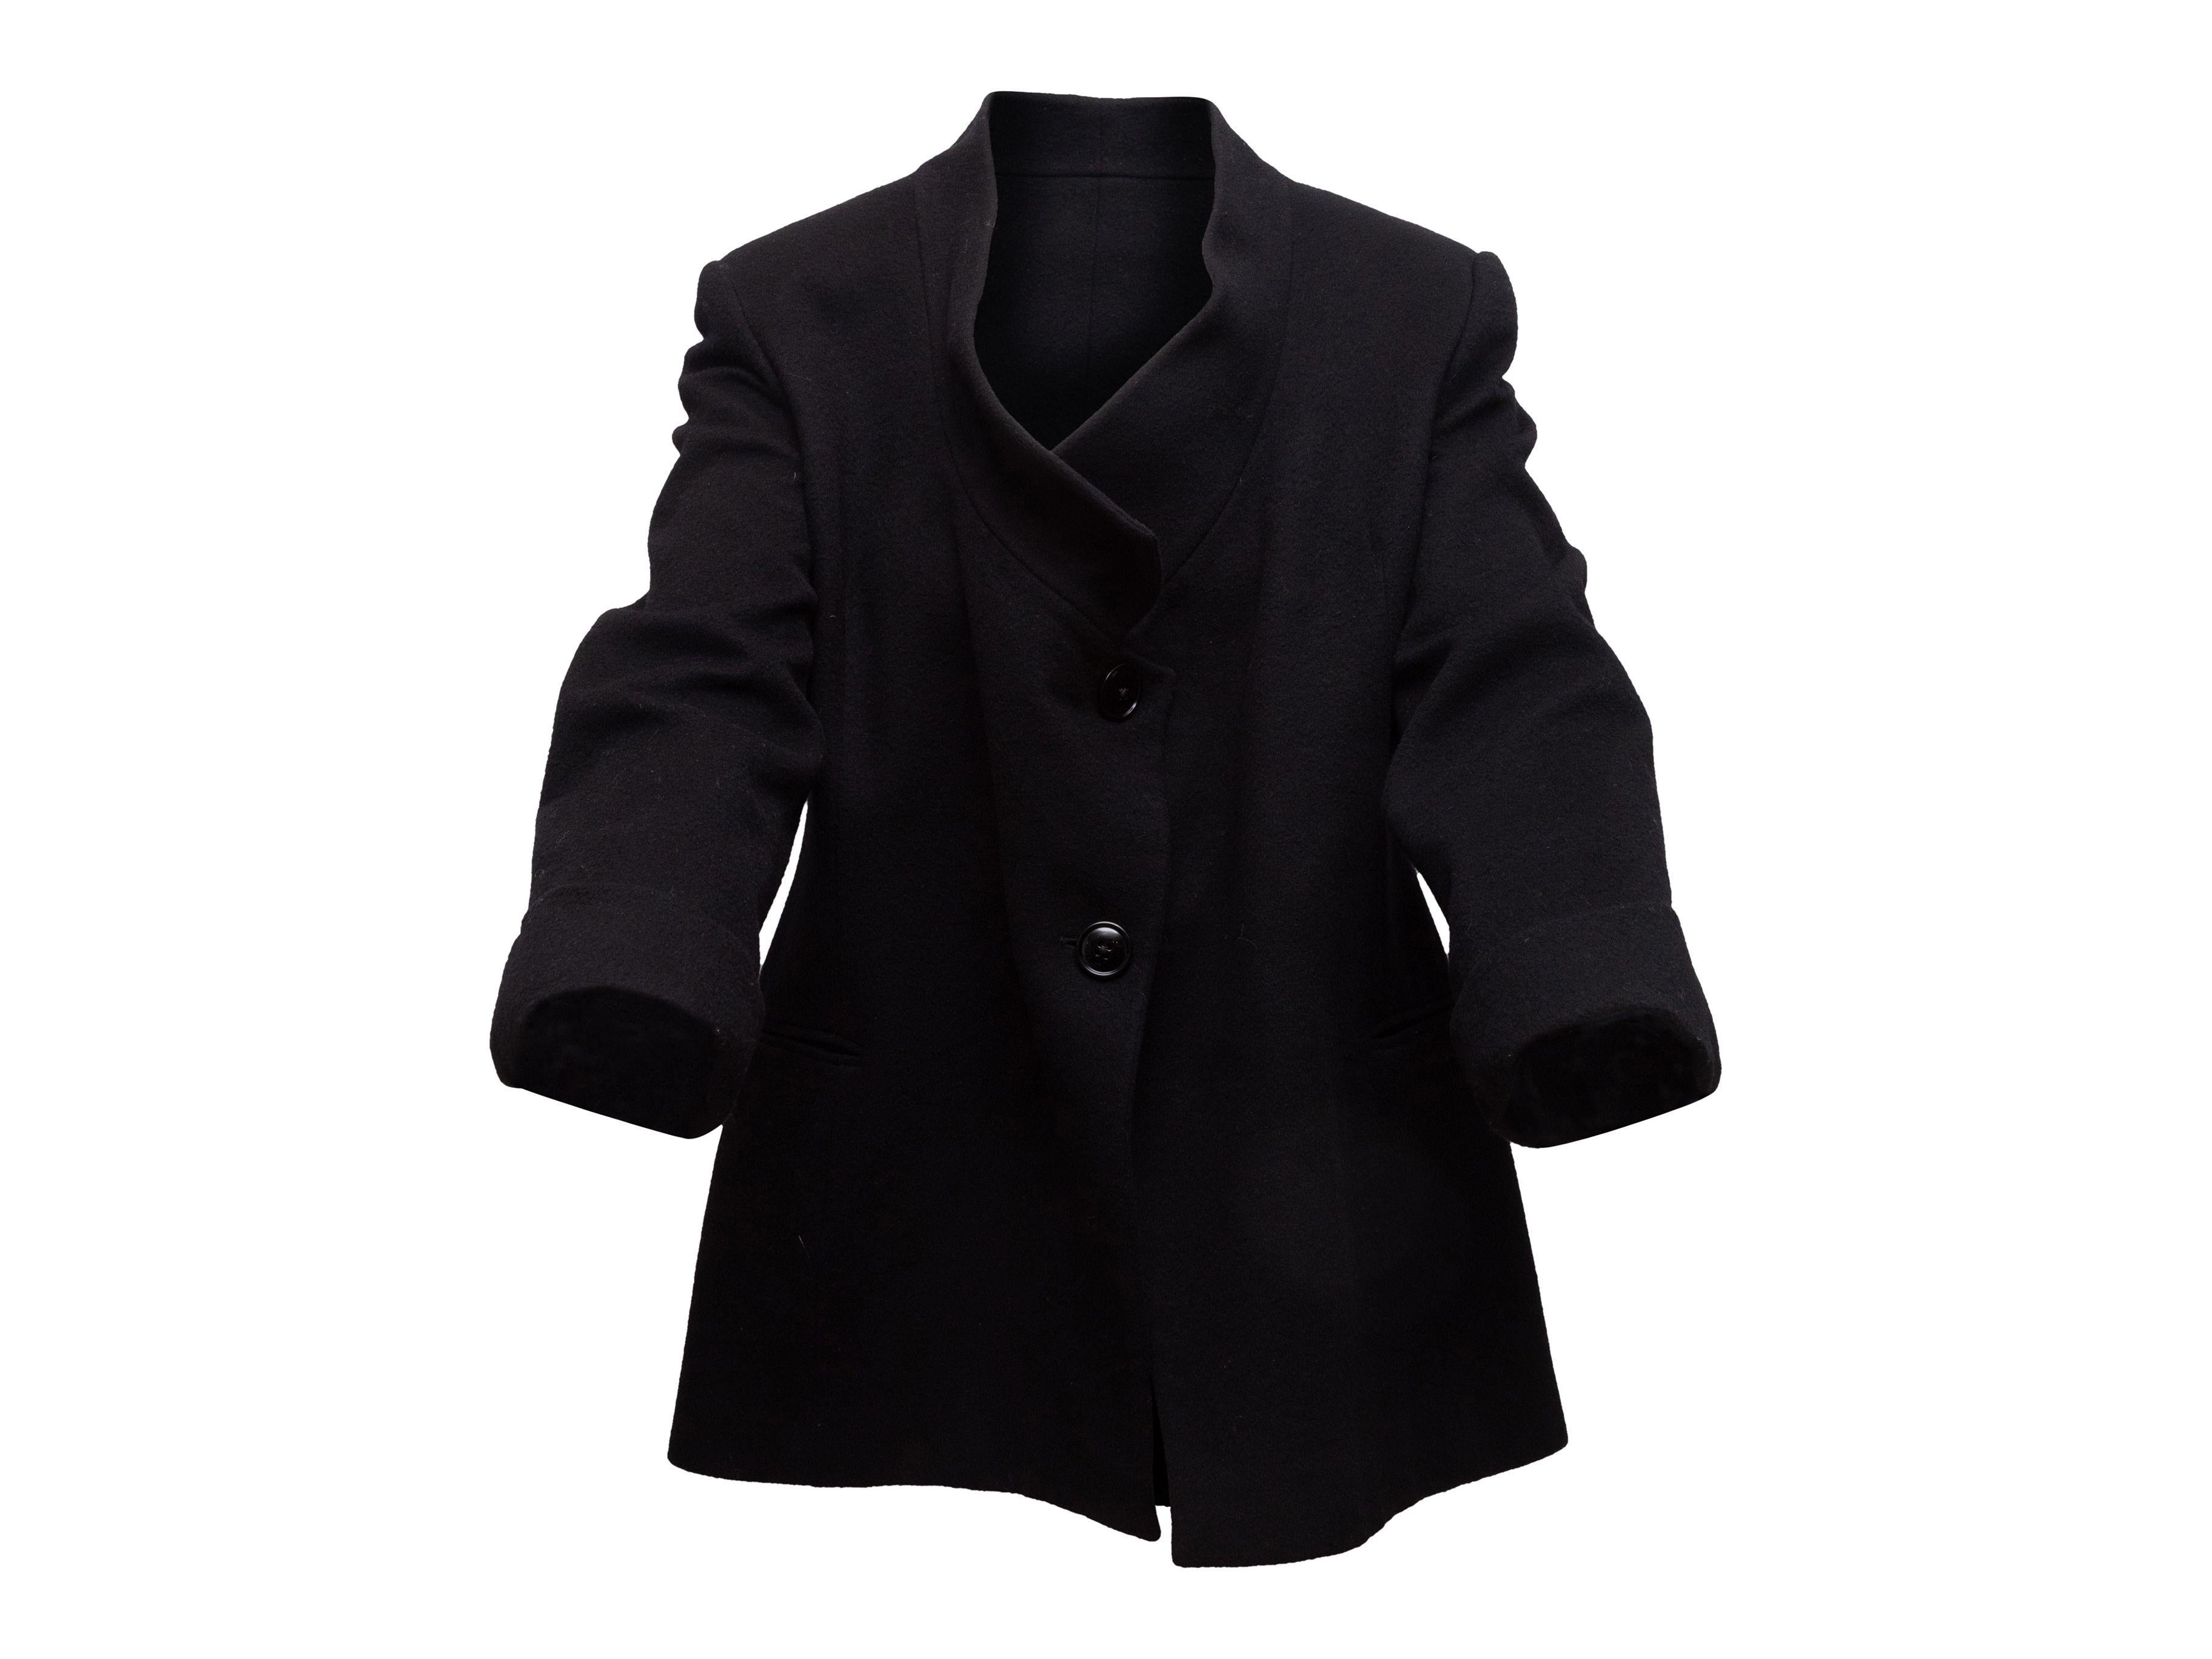 Men's Gianfranco Ferre Vintage Black Wool Jacket